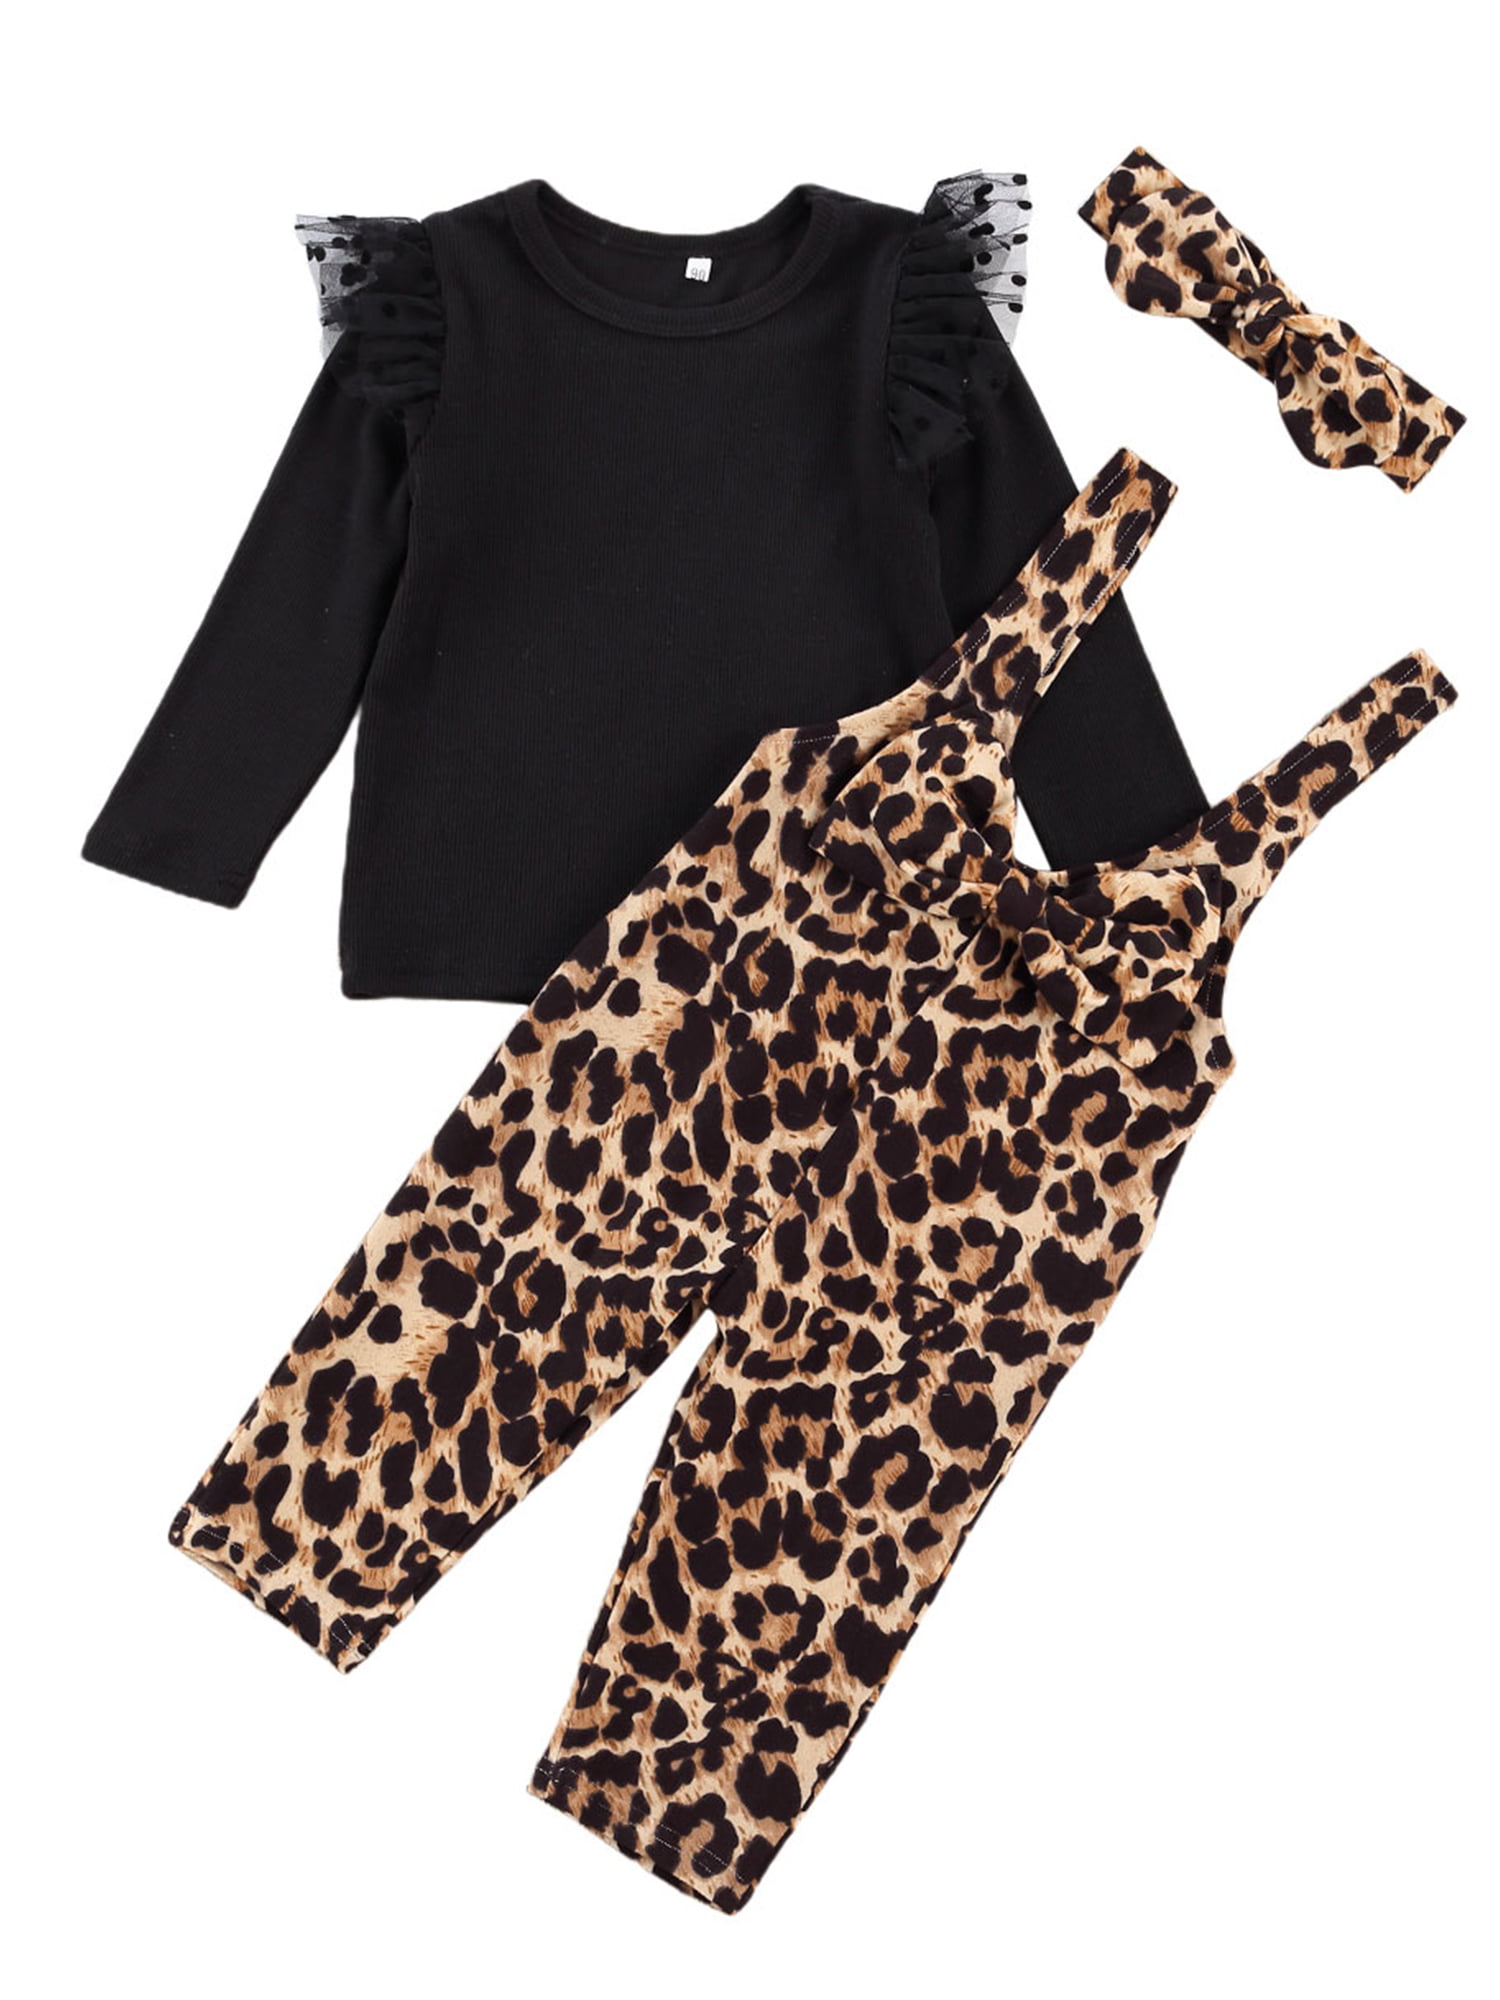 Toddler Baby Girl Clothes Set Toddler Long Sleeve O-neck Top Leopard Print Pants 